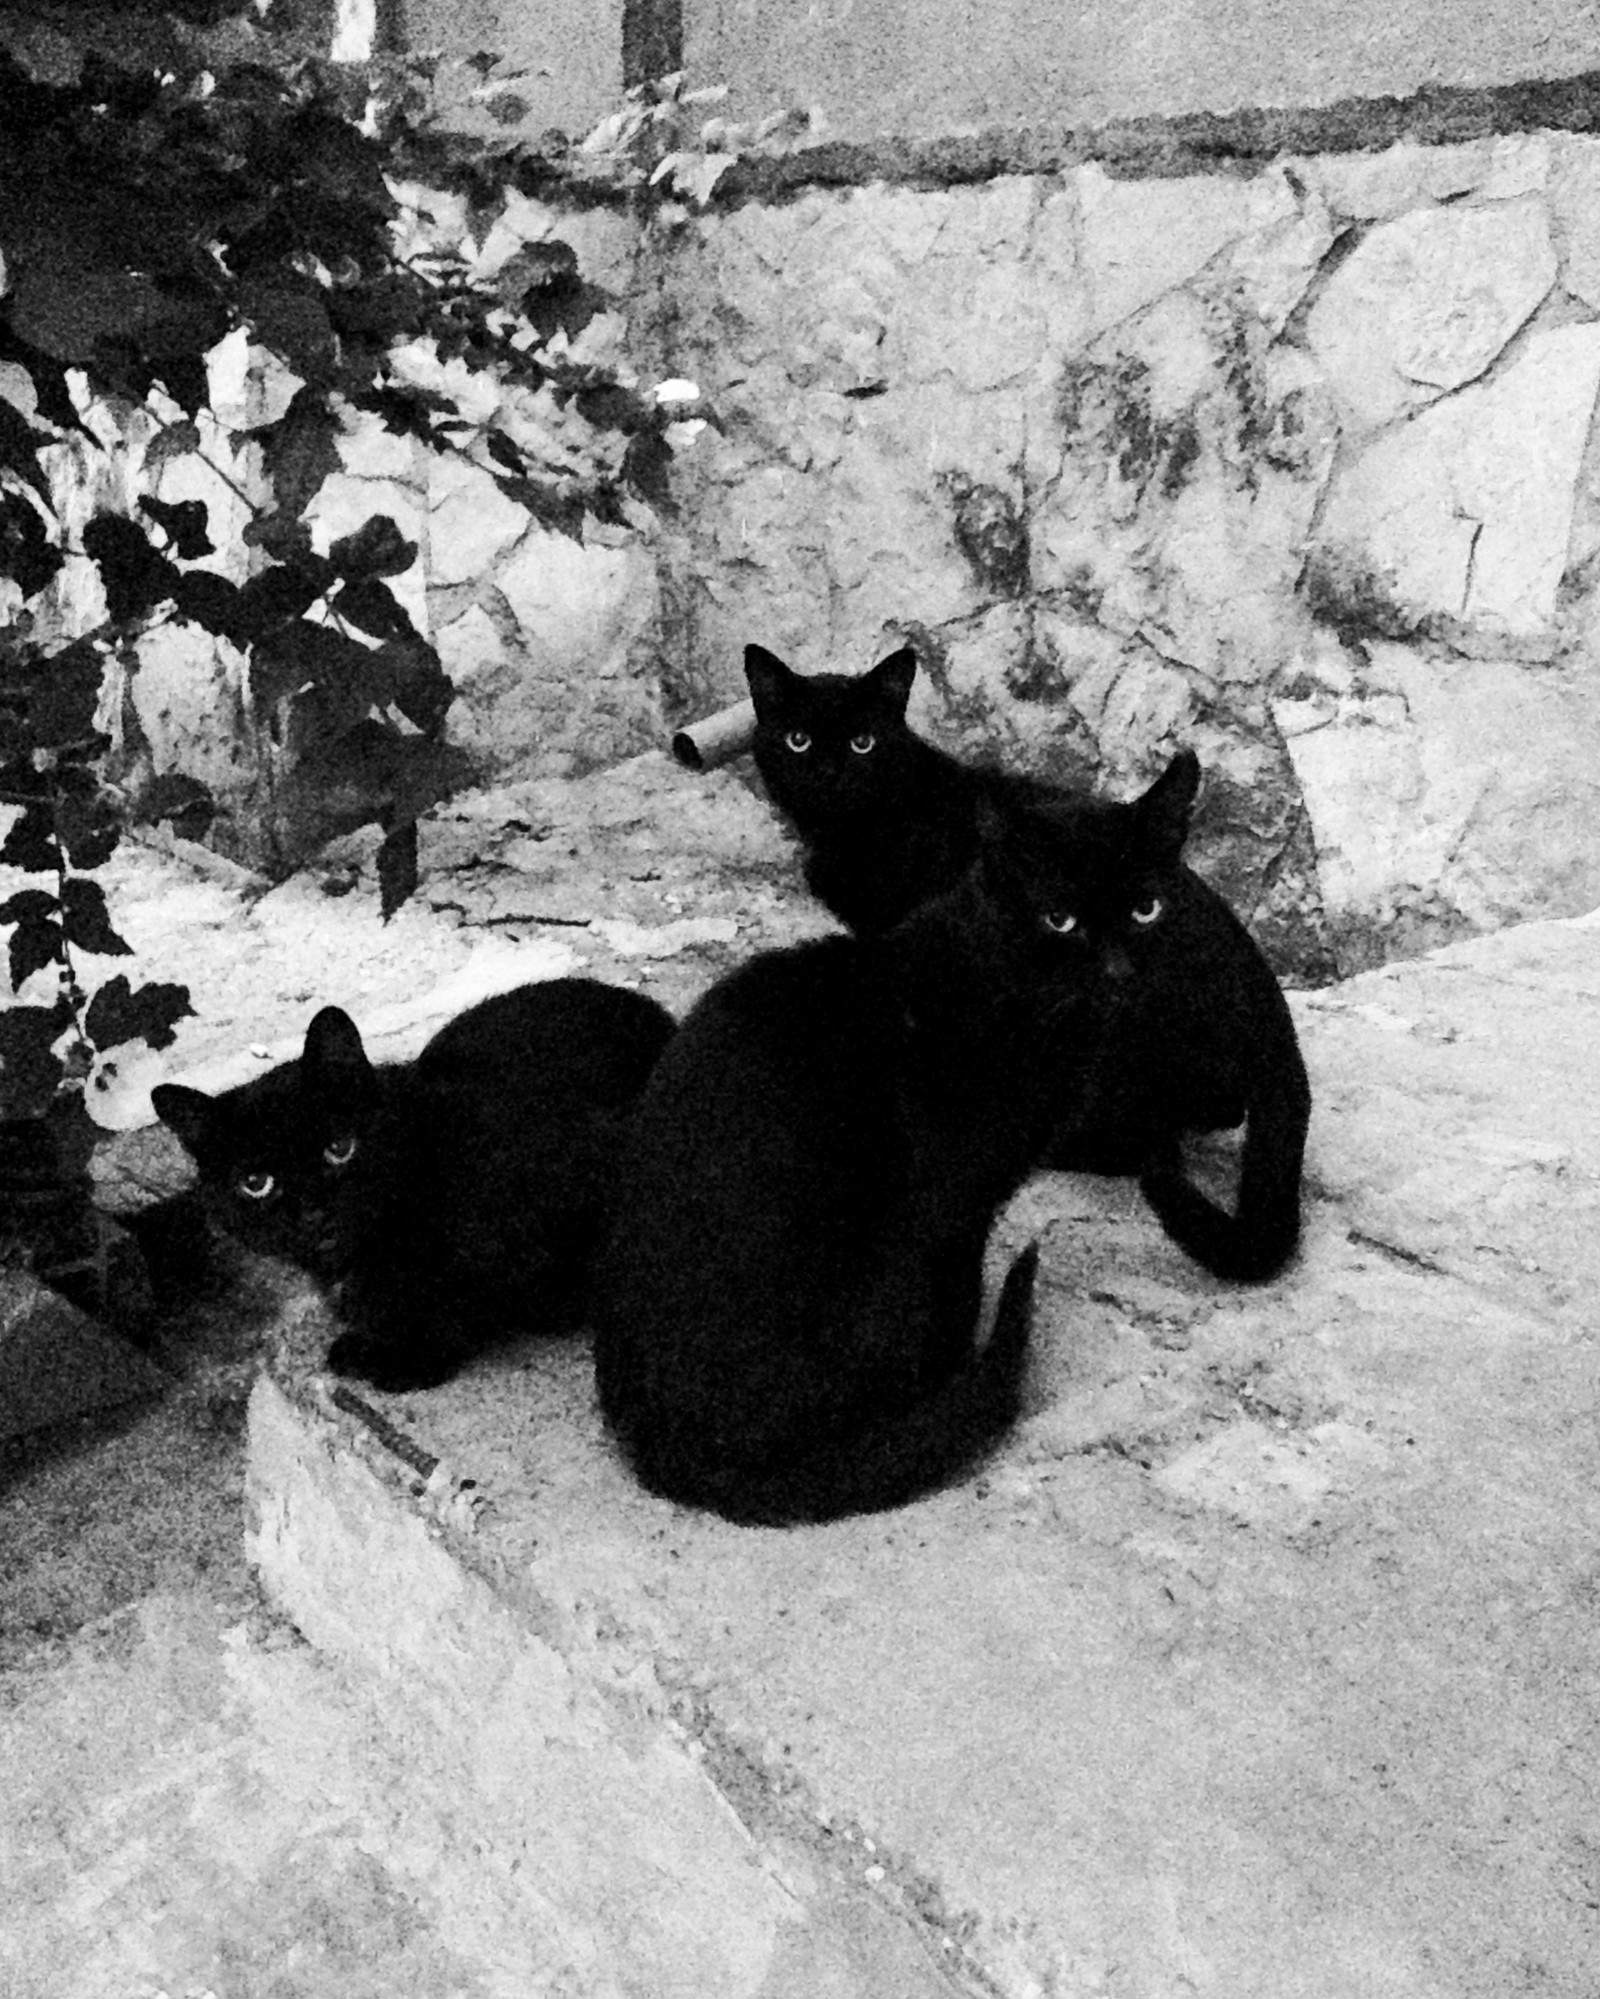 When unlucky TRIPLE - My, Catomafia, No cats, Black cat, cat